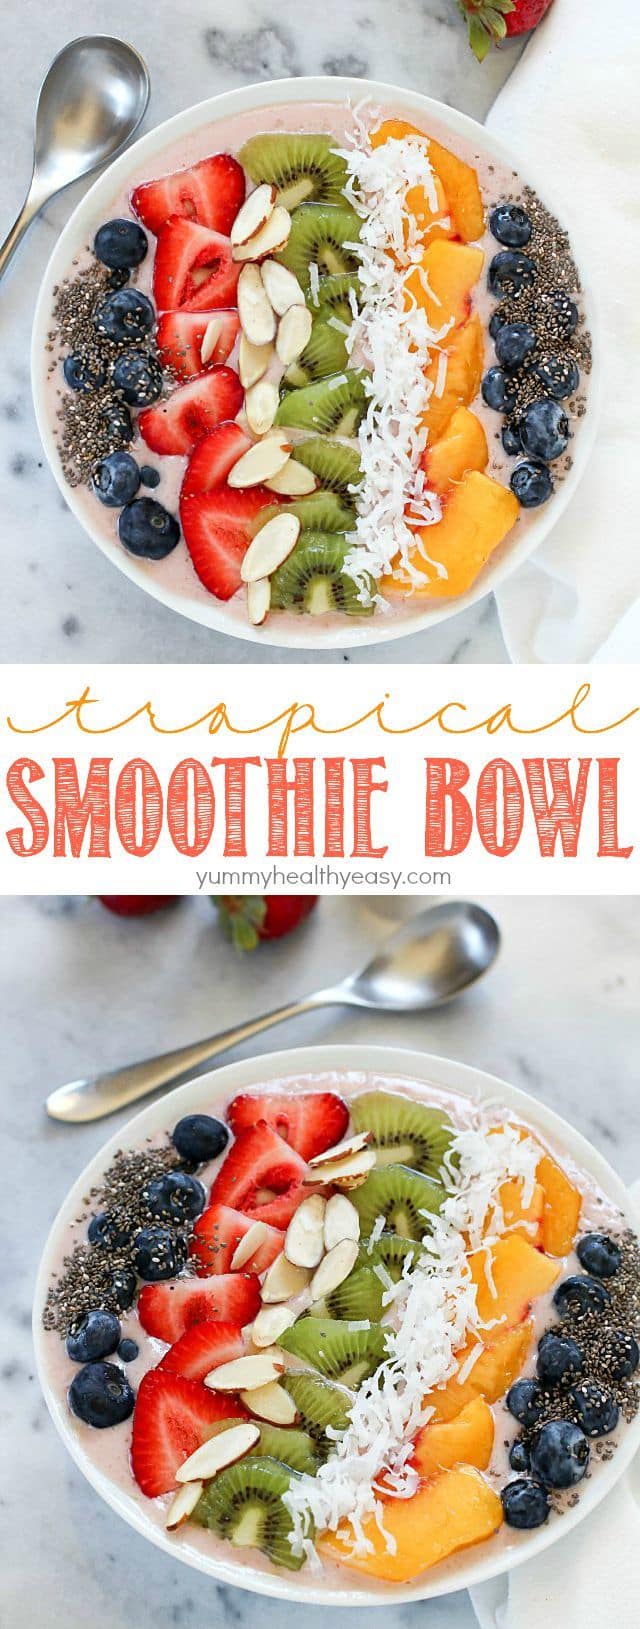 Tropical Smoothie Bowl Recipe   Yummy Healthy Easy